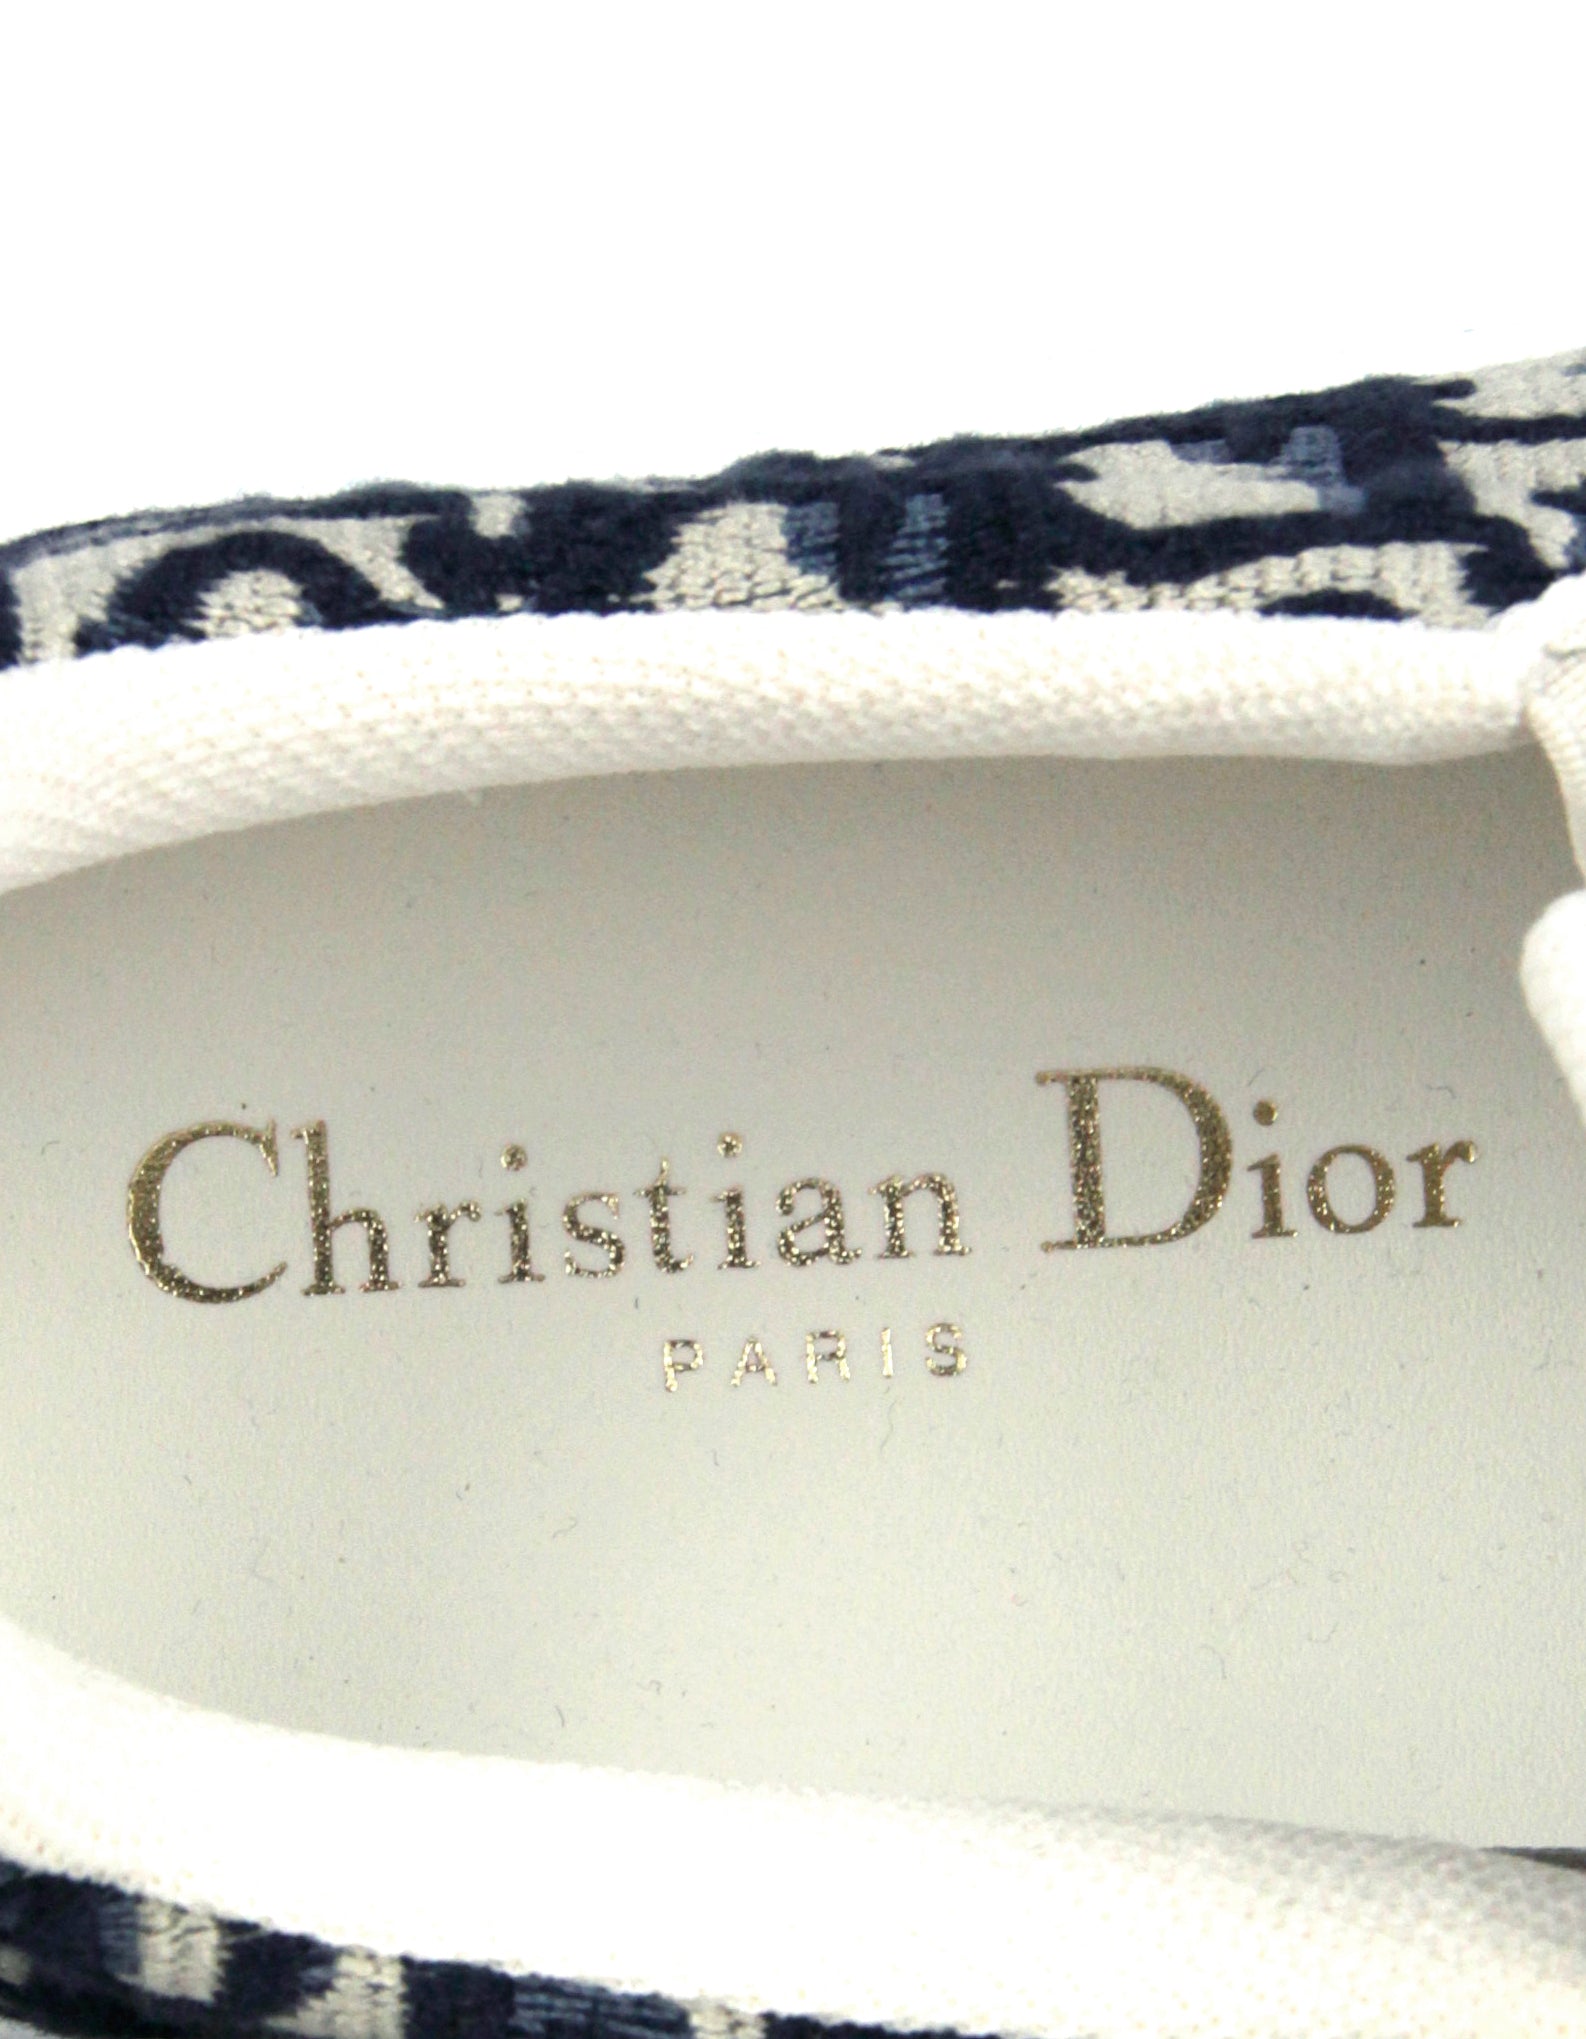 Christian Dior Blue Monogram Oblique Solar Sneakers sz 38